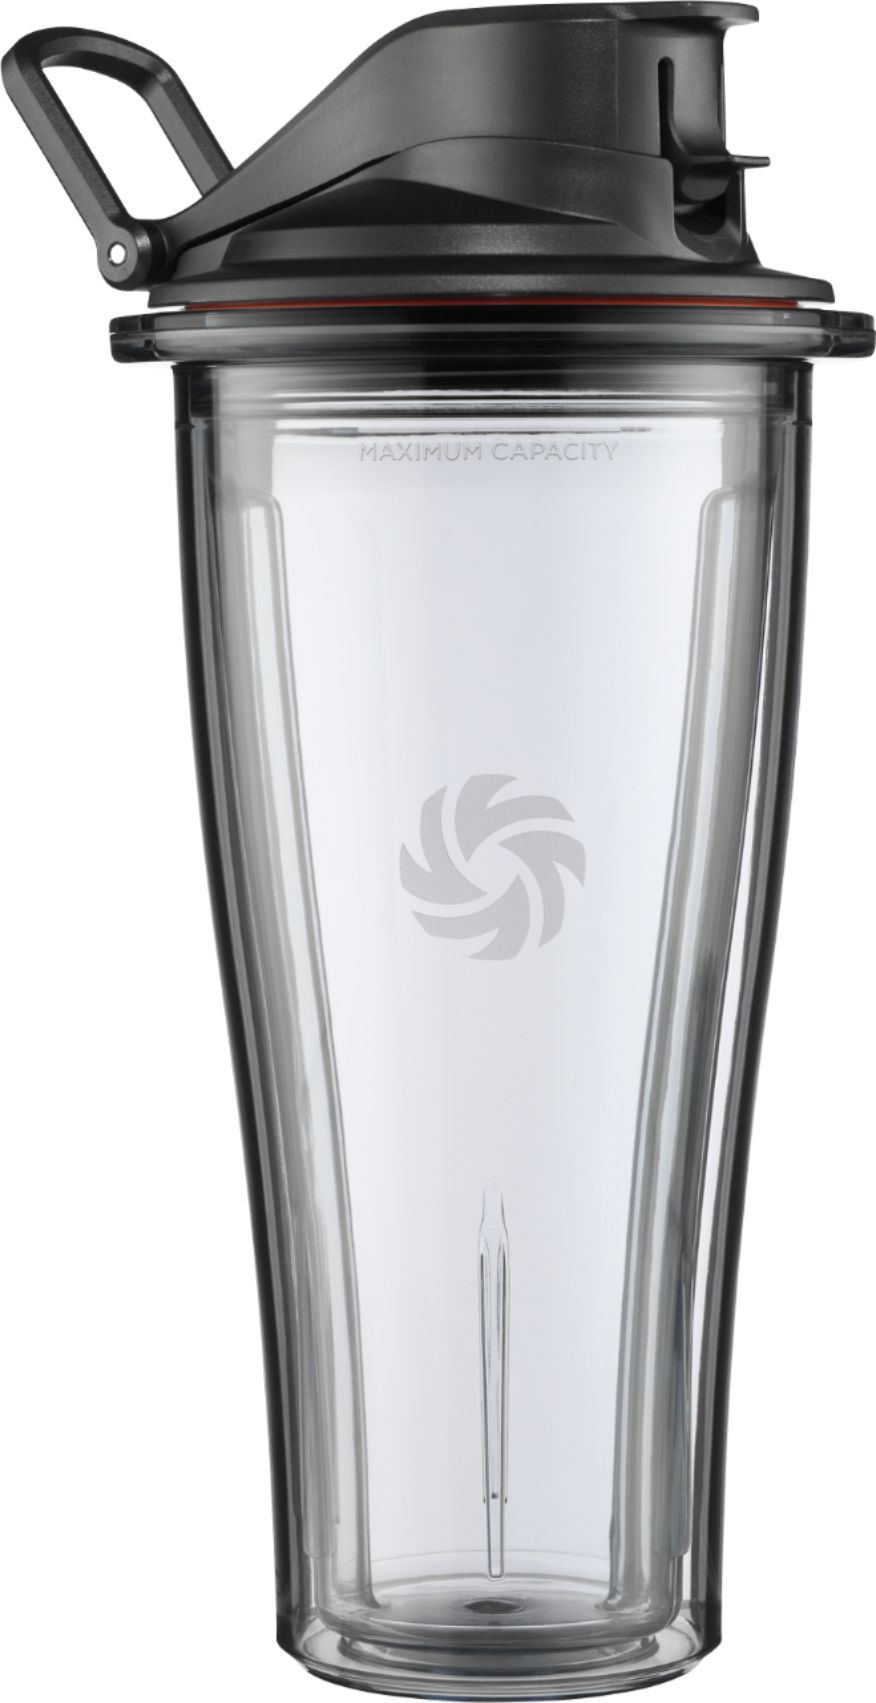 Vitamix 5 Pc Blending Cup And Bowl Starter Kit Black : Target